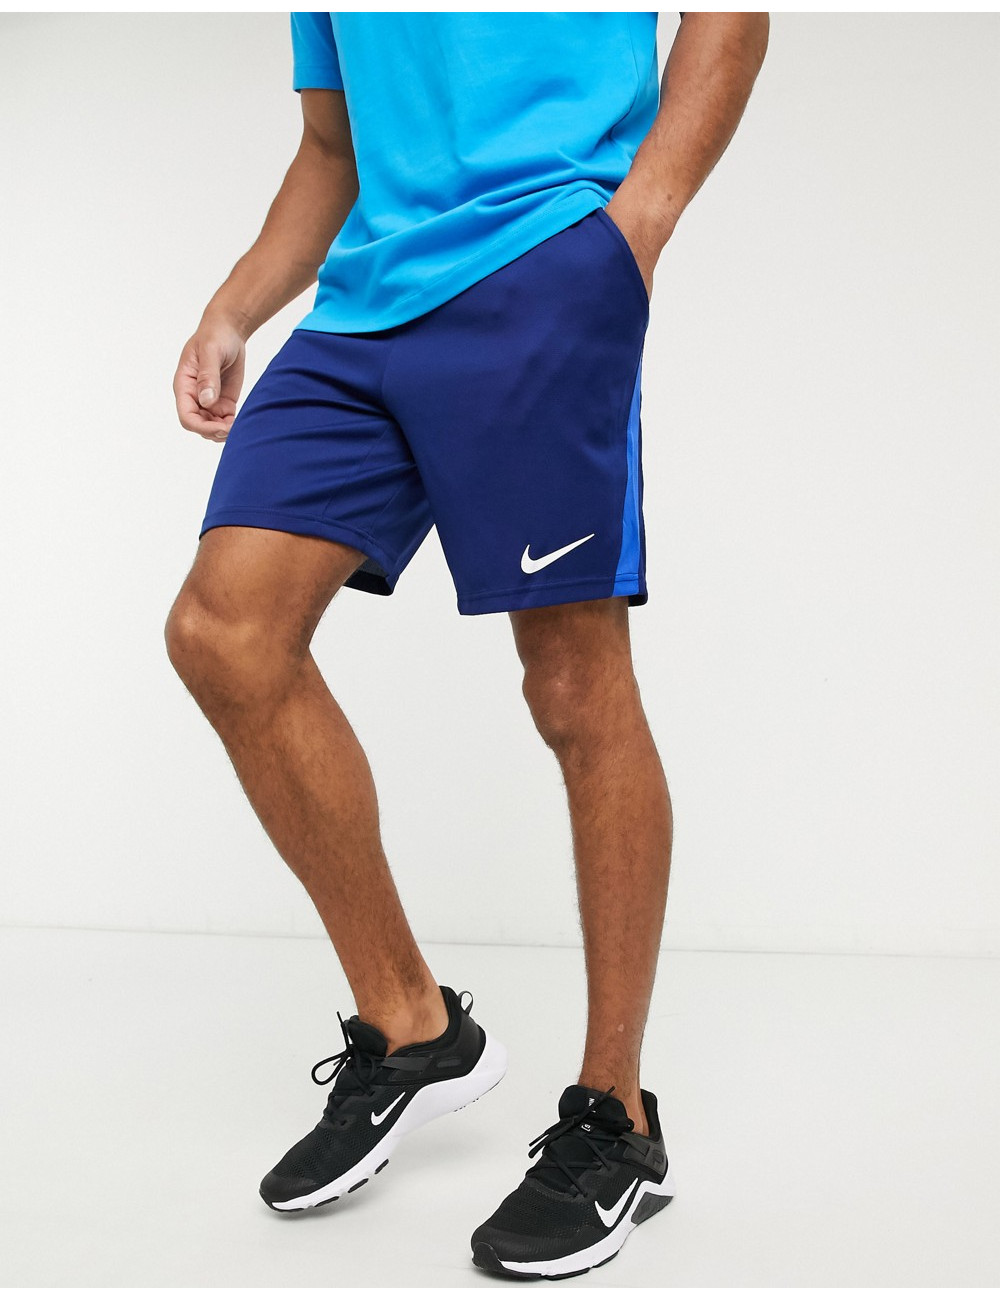 Nike Training shorts in navy